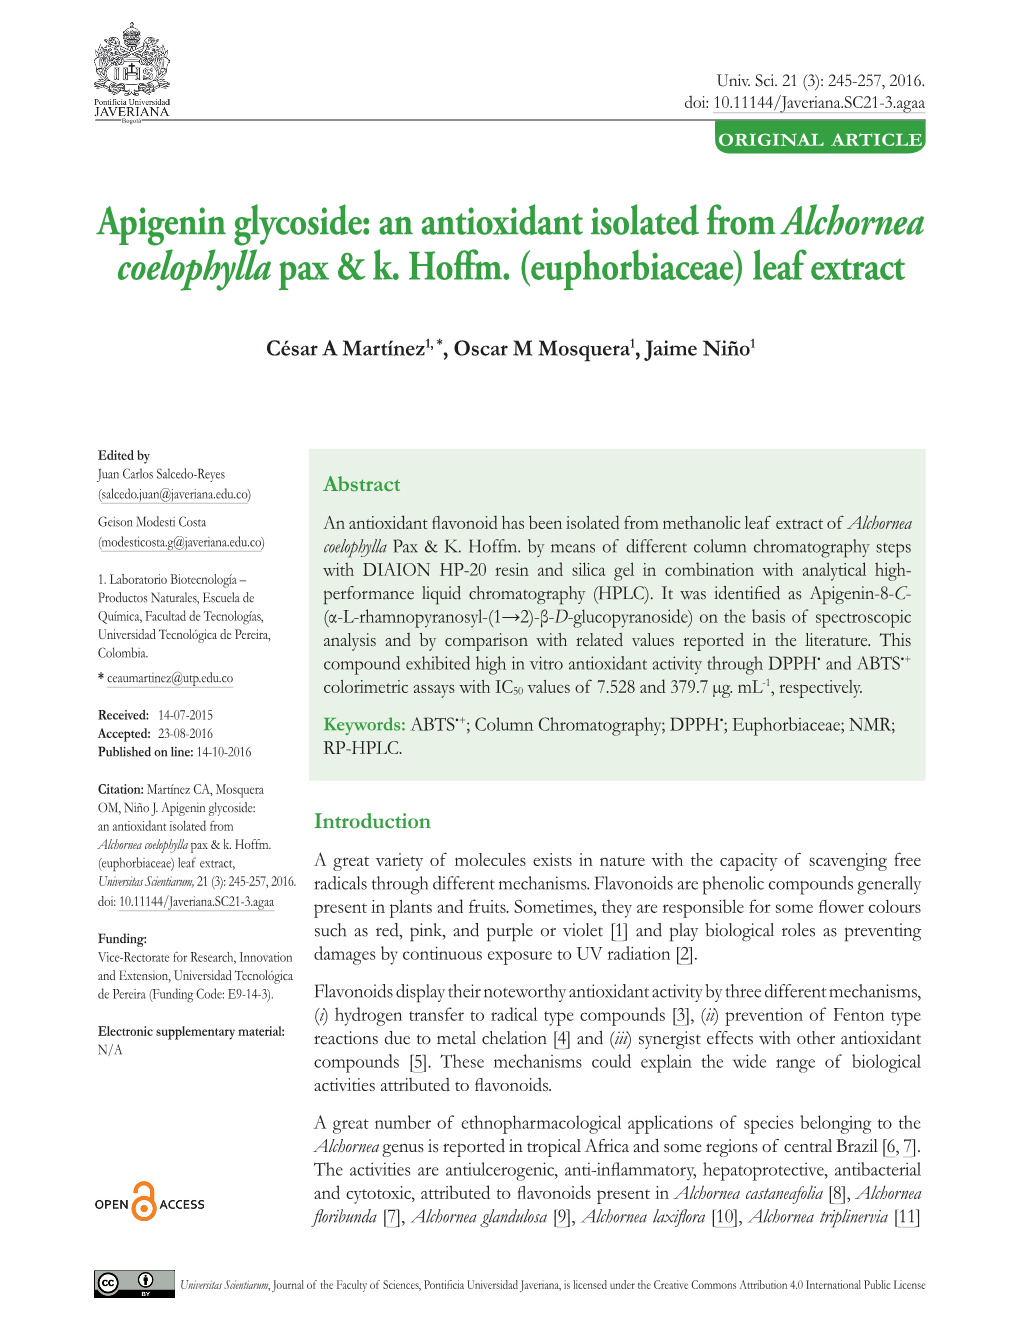 Apigenin Glycoside: an Antioxidant Isolated from Alchornea Coelophylla Pax & K